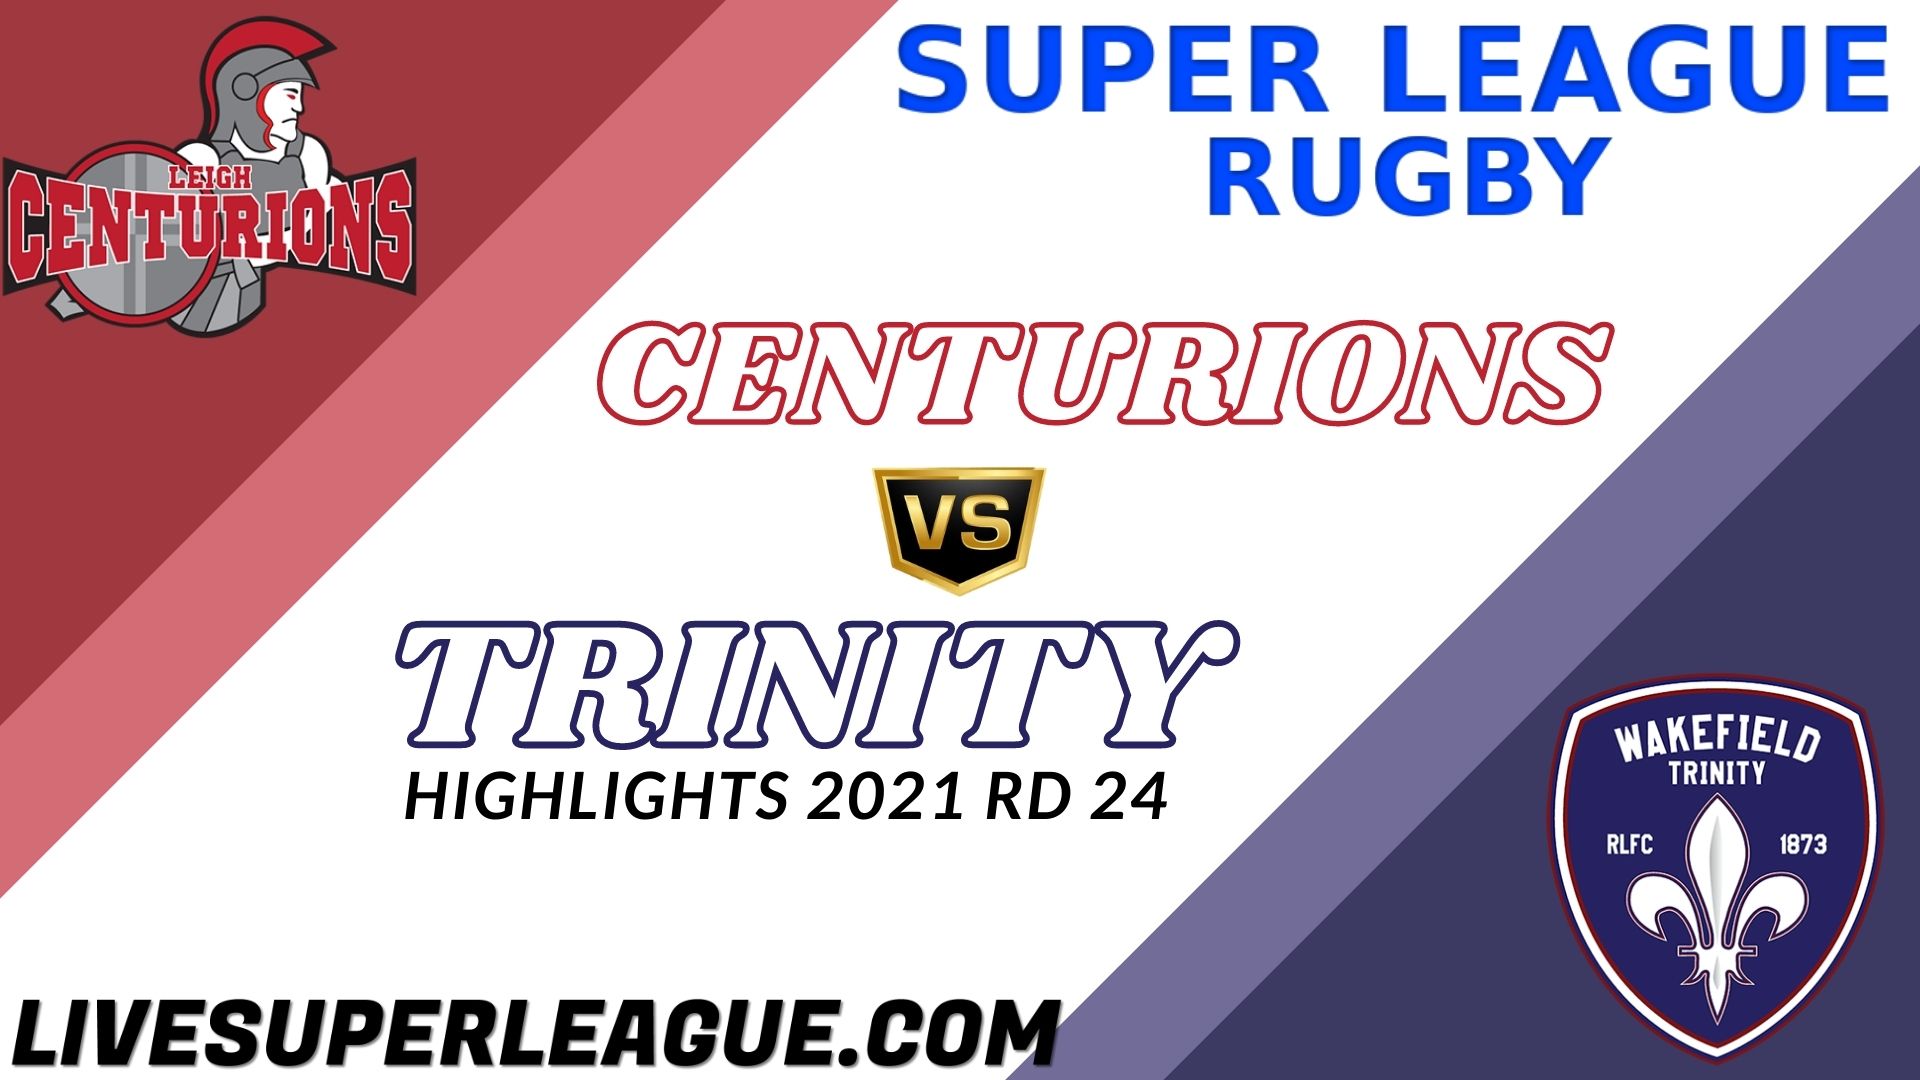 Leigh Centurions Vs Wakefield Trinity Highlights 2021